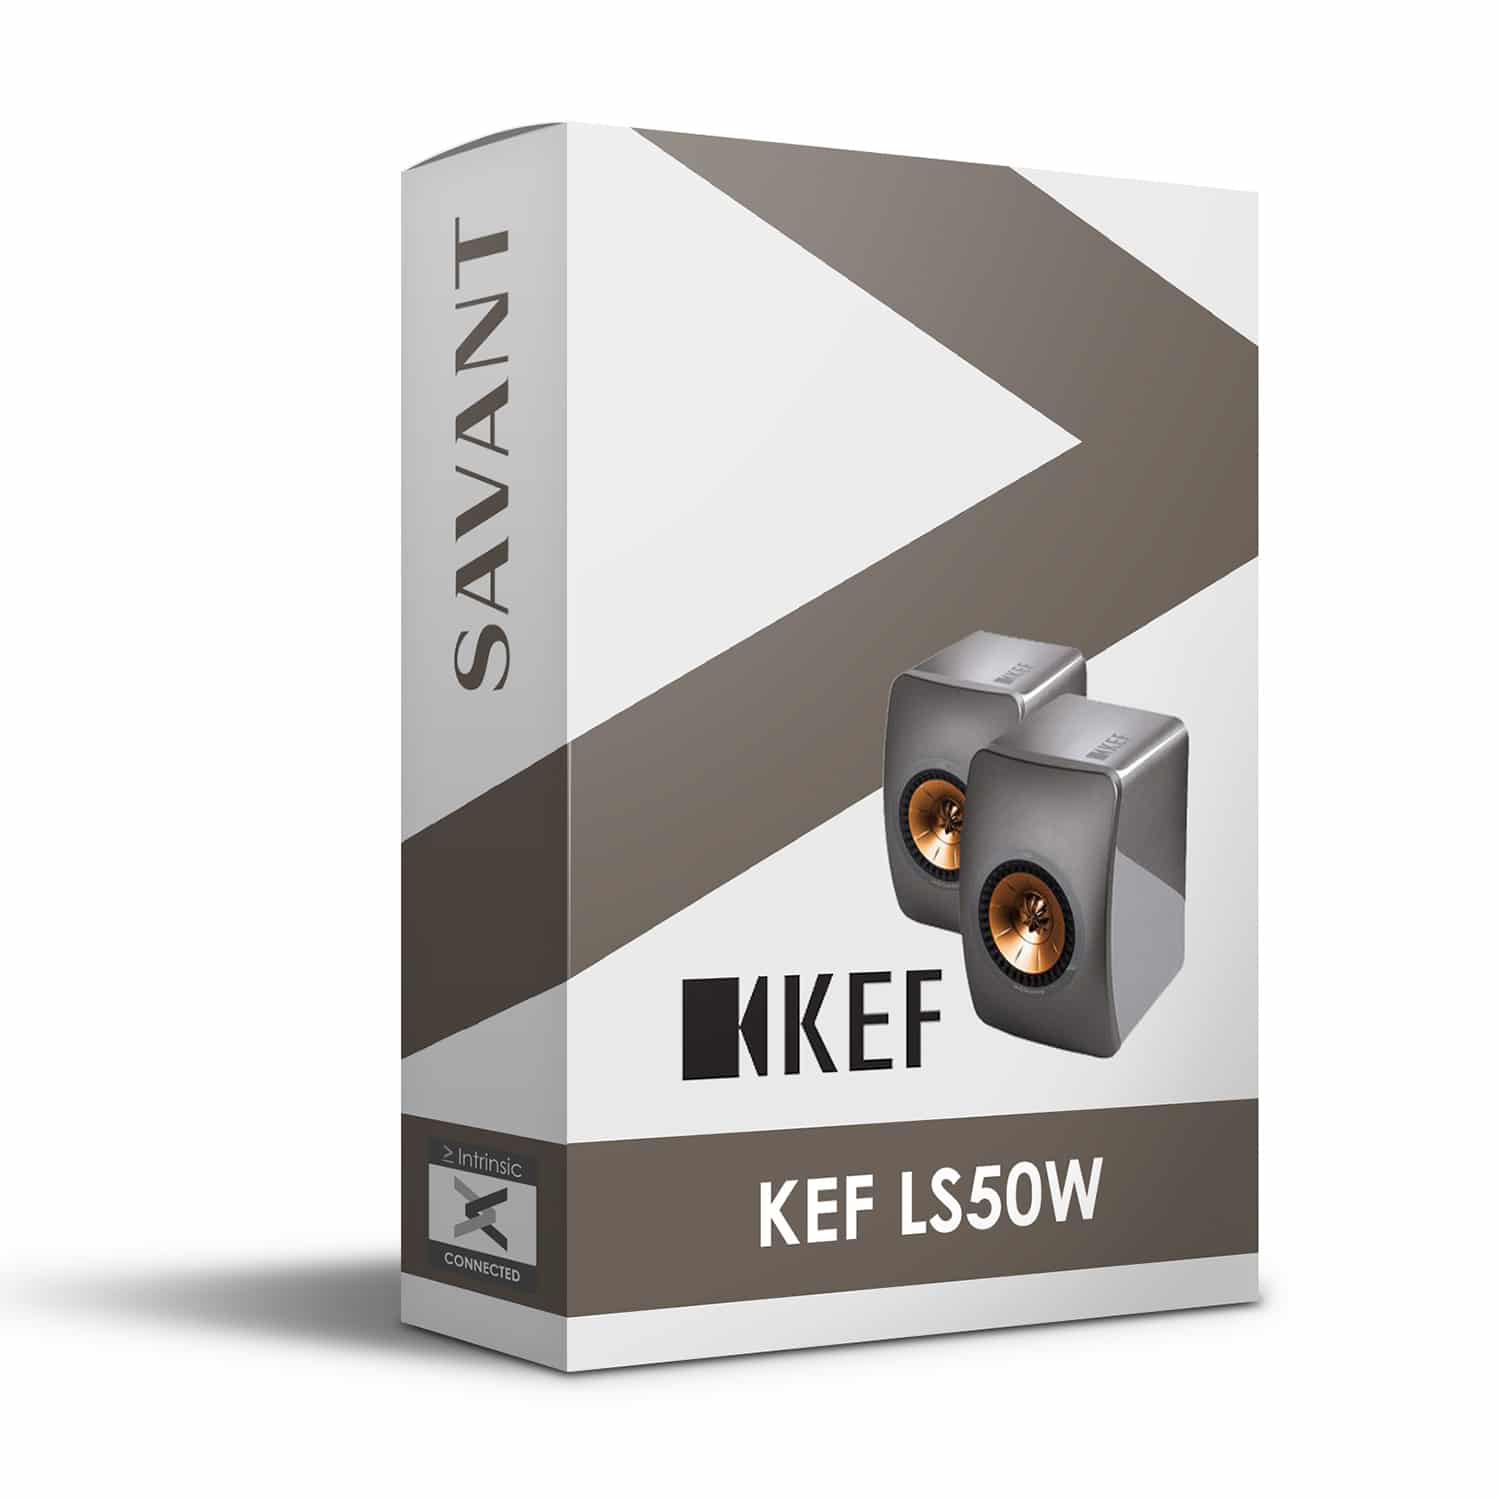 KEF LS50W Profile for Savant